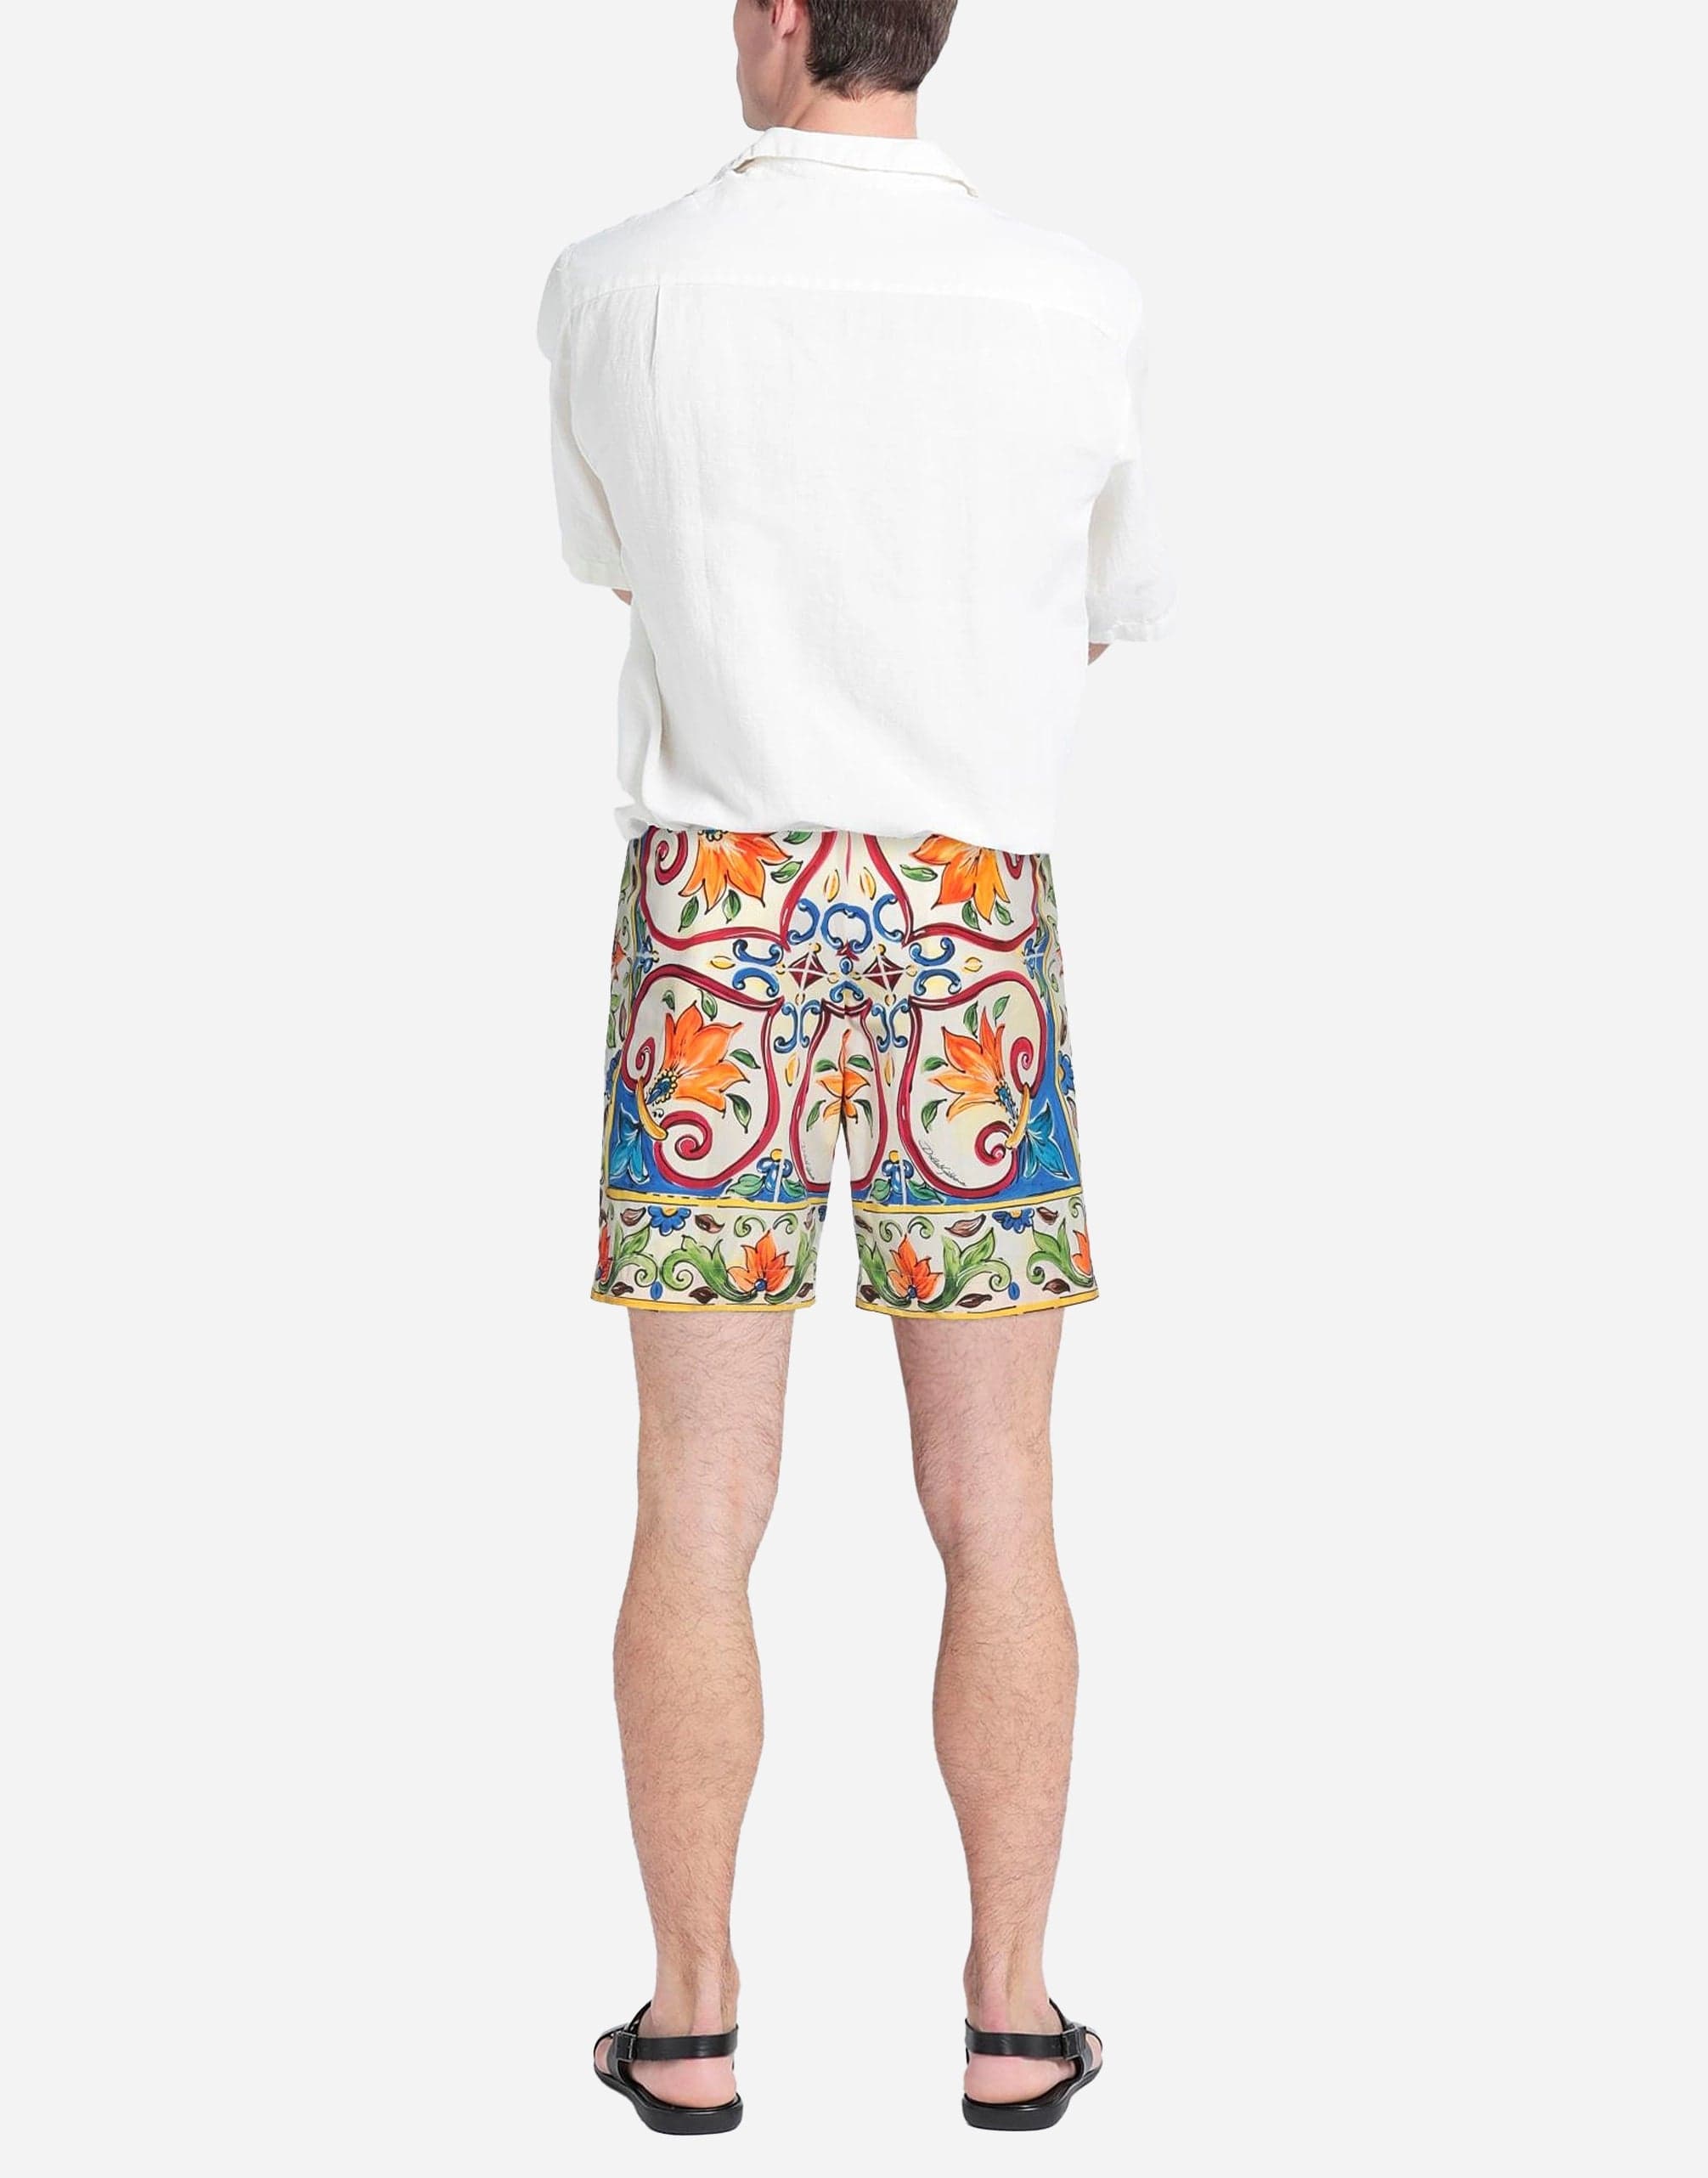 Dolce & Gabbana Cotton Majolica Print Shorts